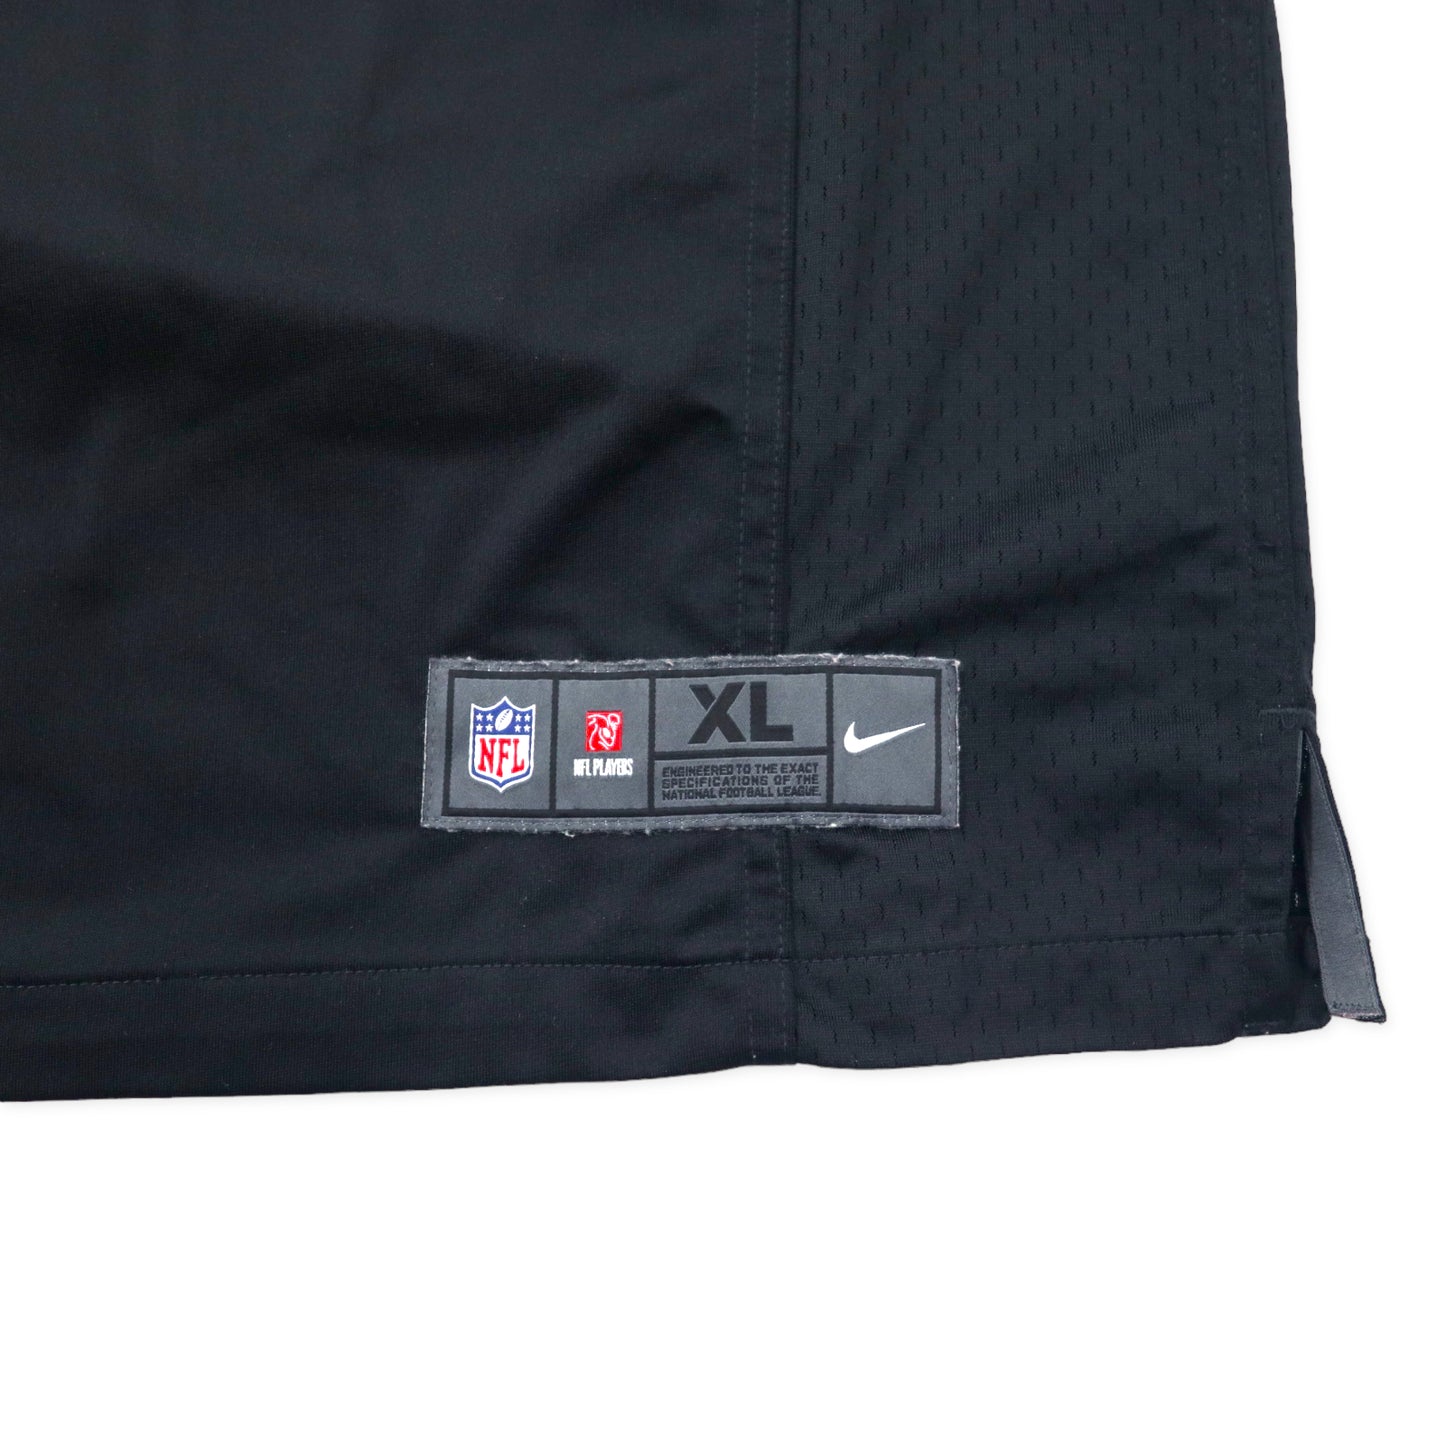 NIKE NFL ゲームシャツ XL ブラック ポリエステル LYNCH ナンバリング ビッグサイズ